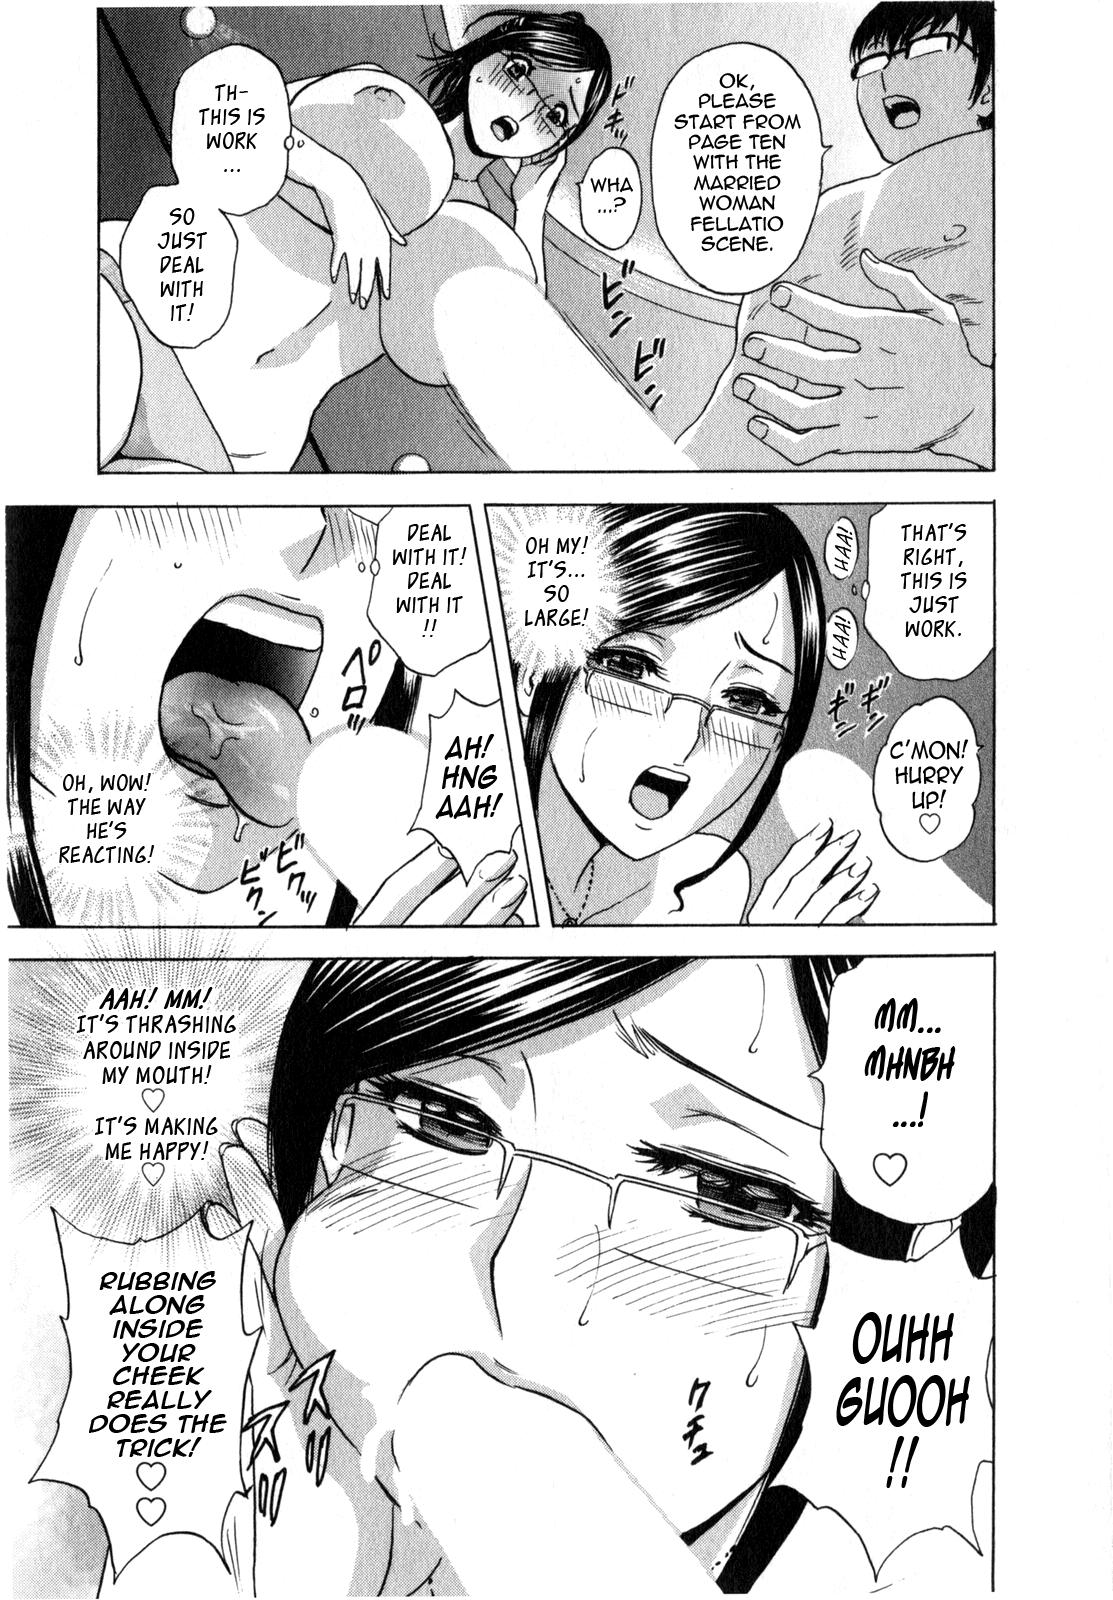 [Hidemaru] Life with Married Women Just Like a Manga 2 - Ch. 1-7 [English] {Tadanohito} 19